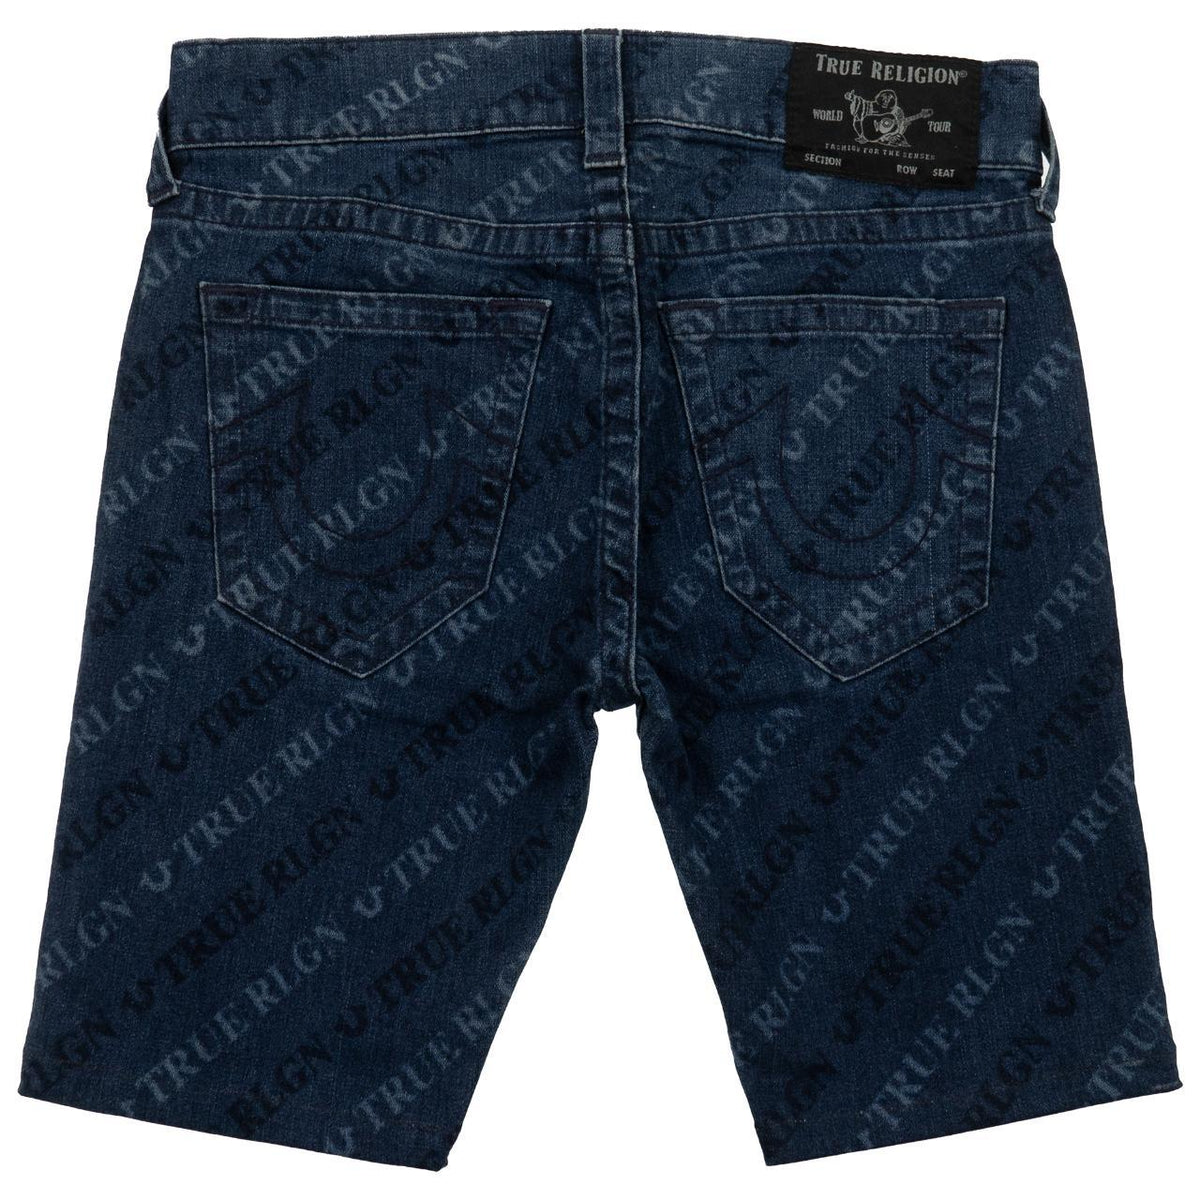 Vintage True Religion Denim Jeans Size W32